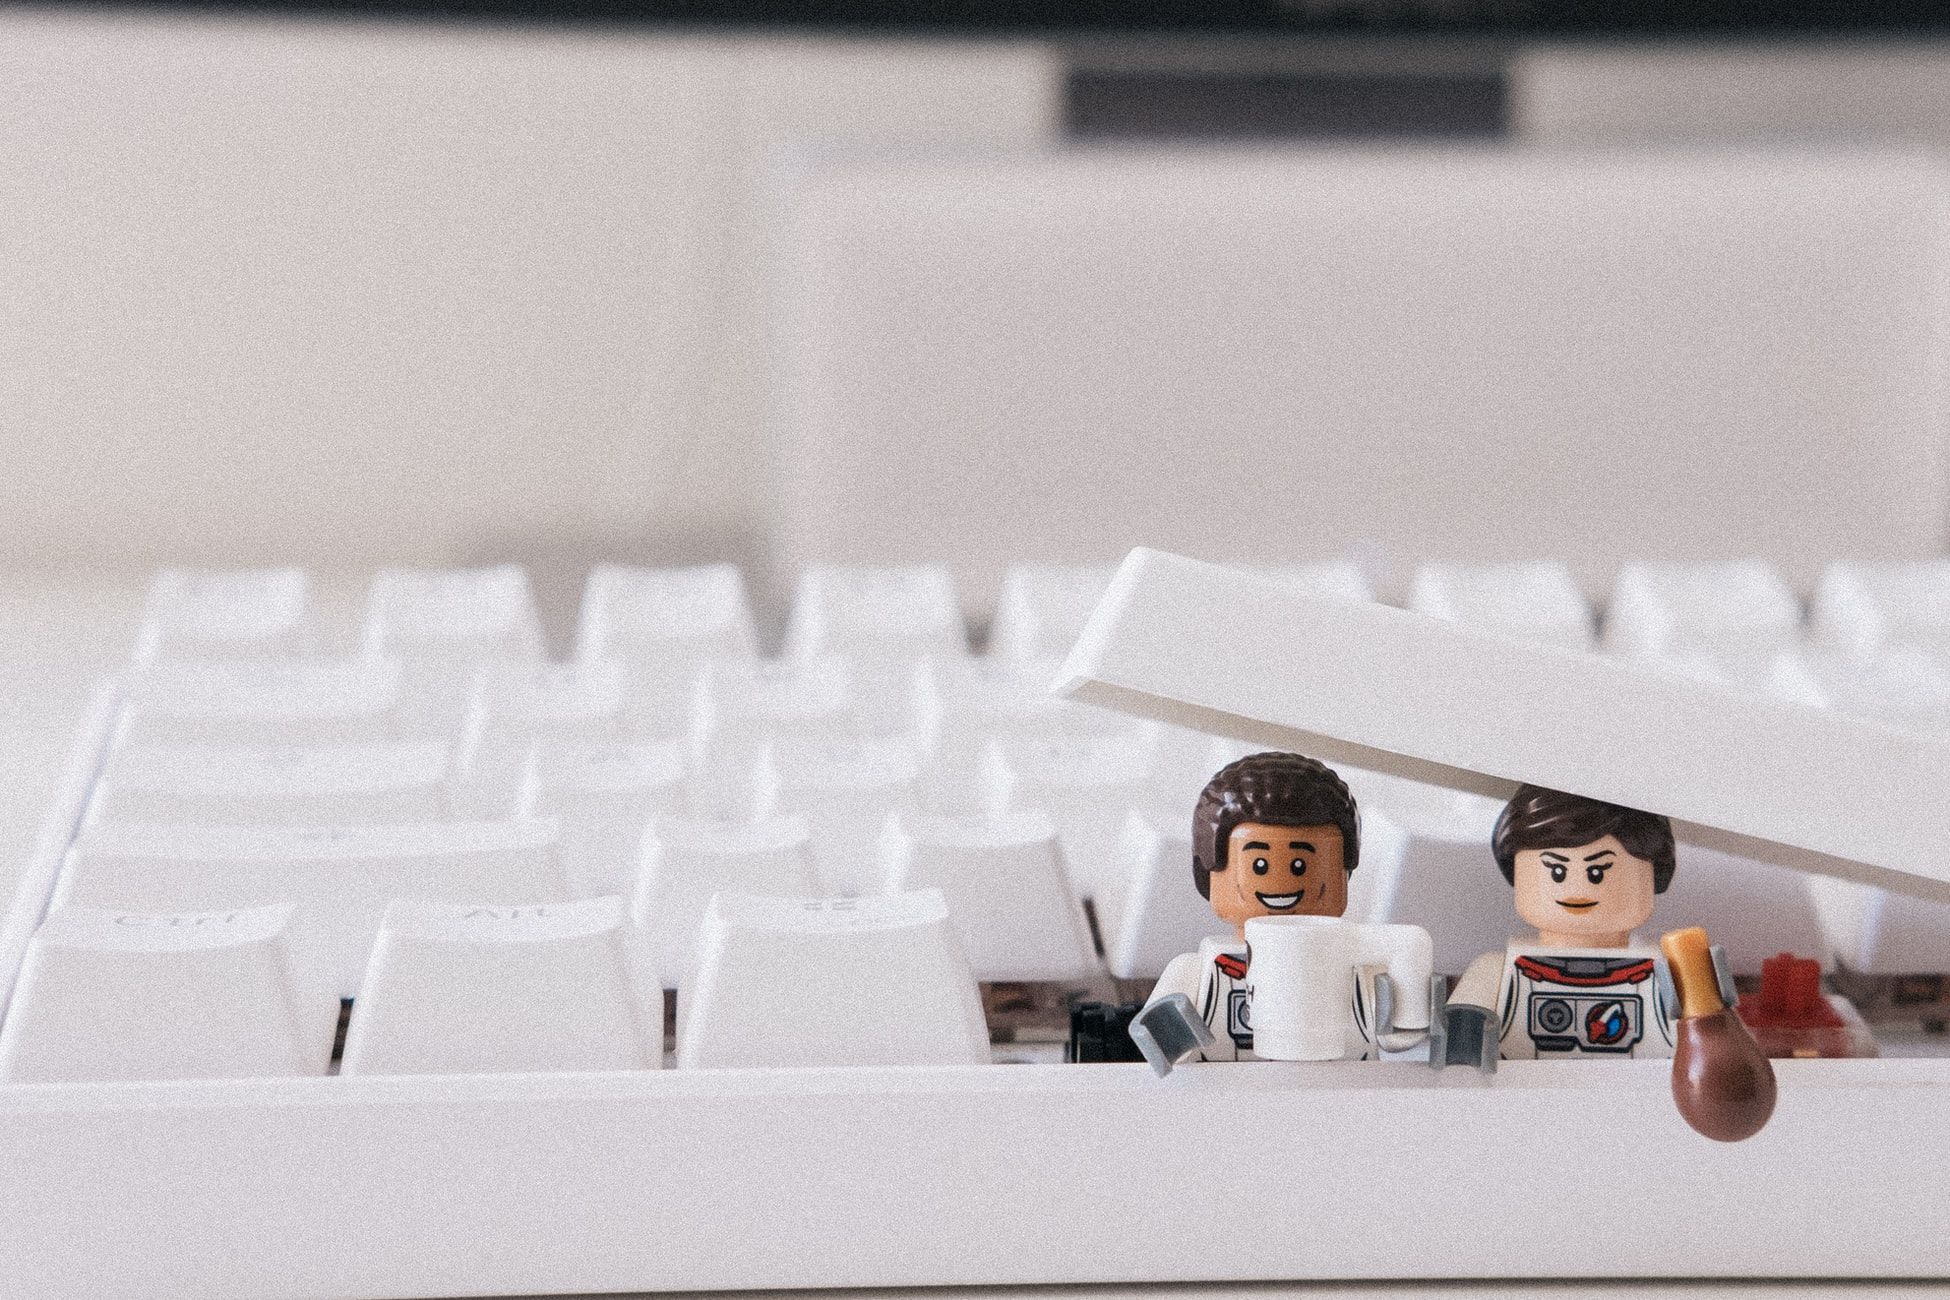 Lego figures in computer keyboard